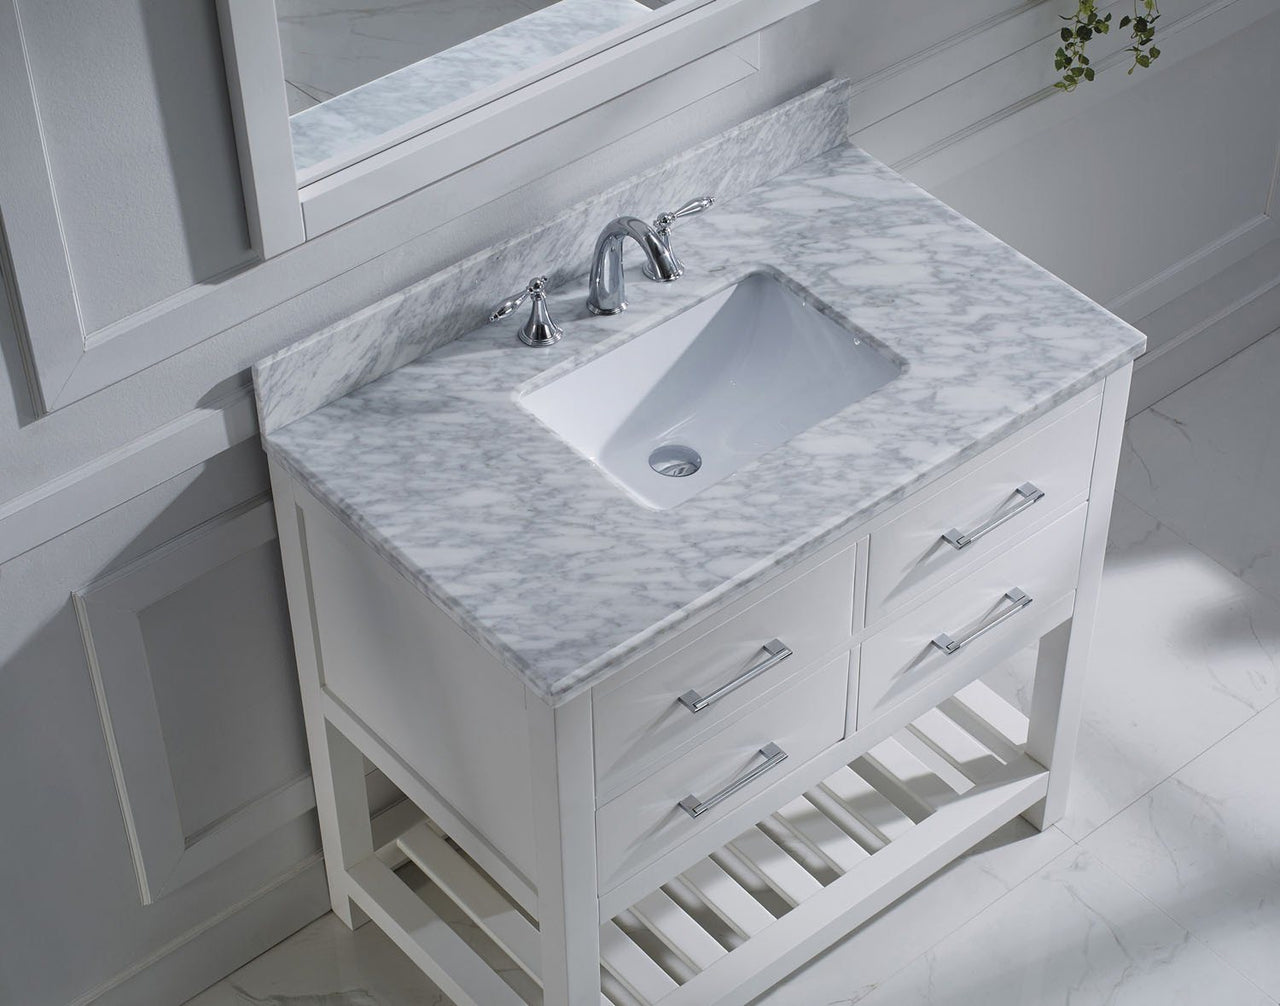 Virtu USA Caroline Estate 36" Single Square Sink White Top Vanity in White with Mirror Vanity Virtu USA 